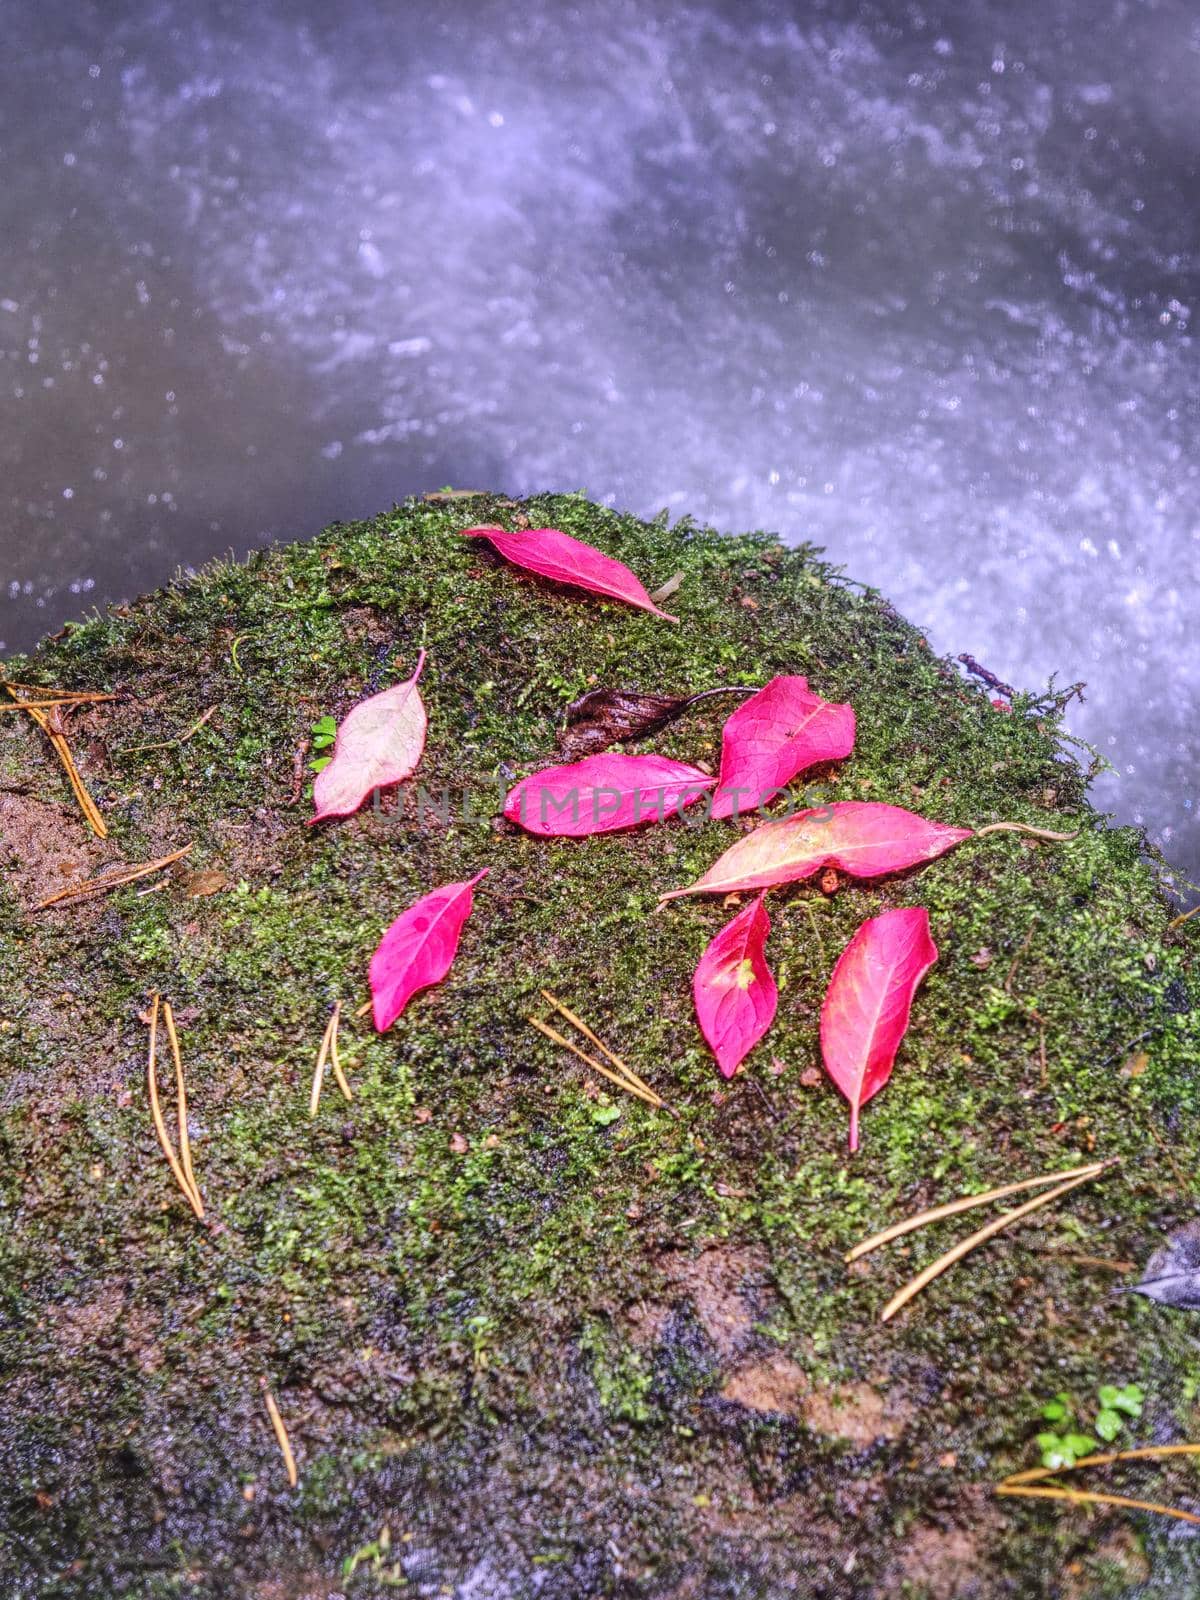 Red pink broken branch leaves in streem. Fallen leaves on sunken boulder in blurred rapids of mountain stream. Shinning bubbles in dark water